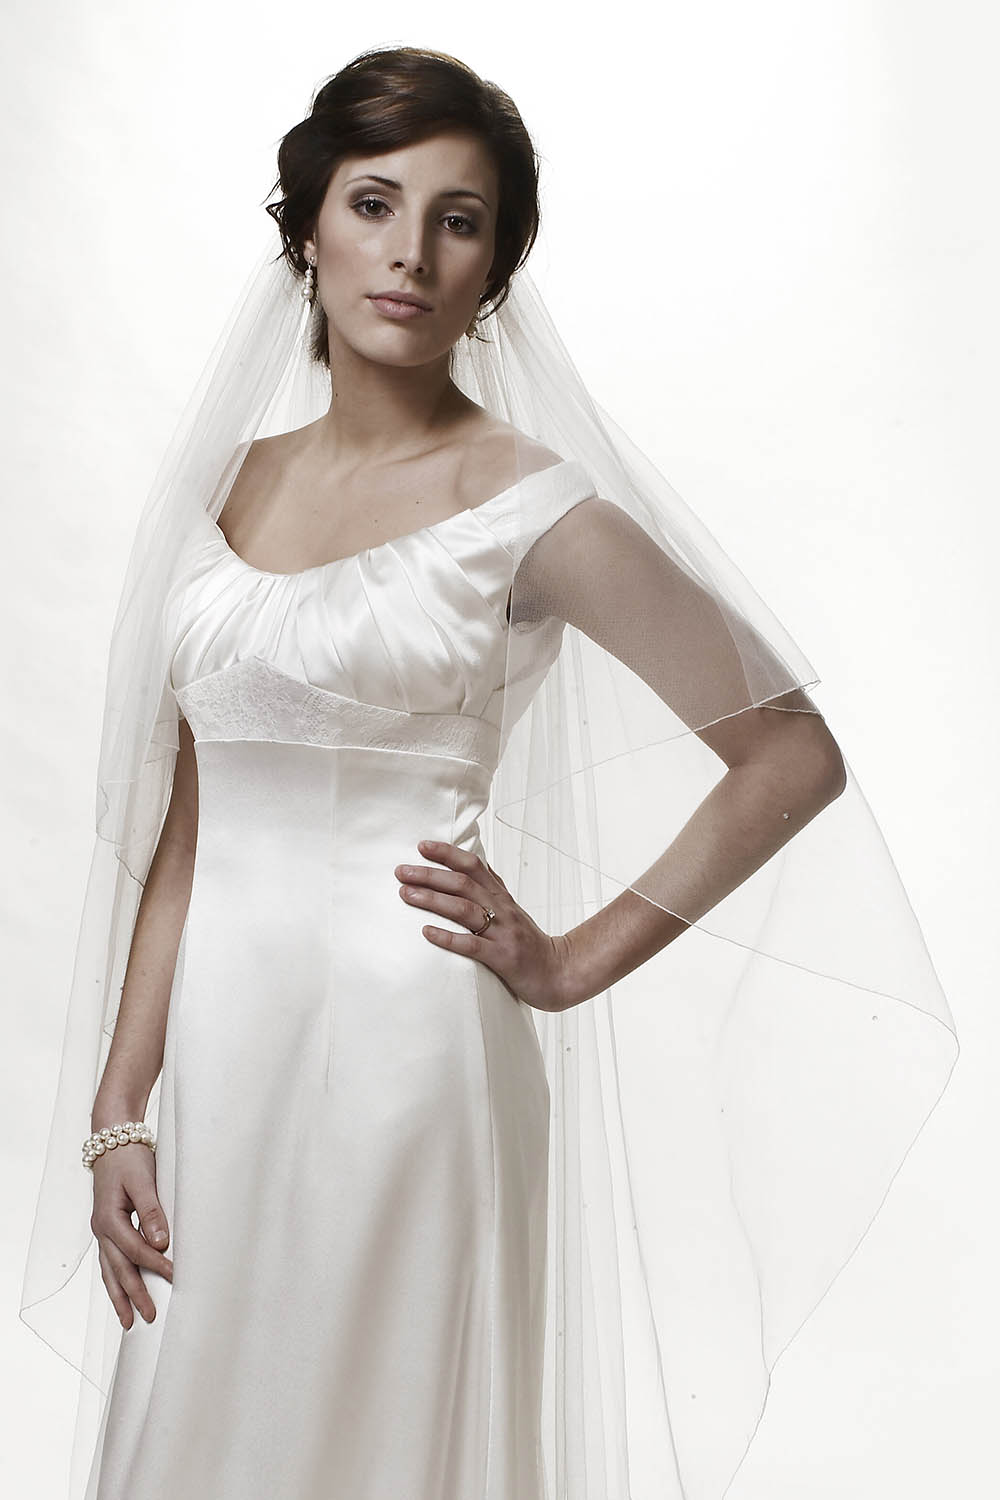 Bridal veil shown with bridal wedding dress